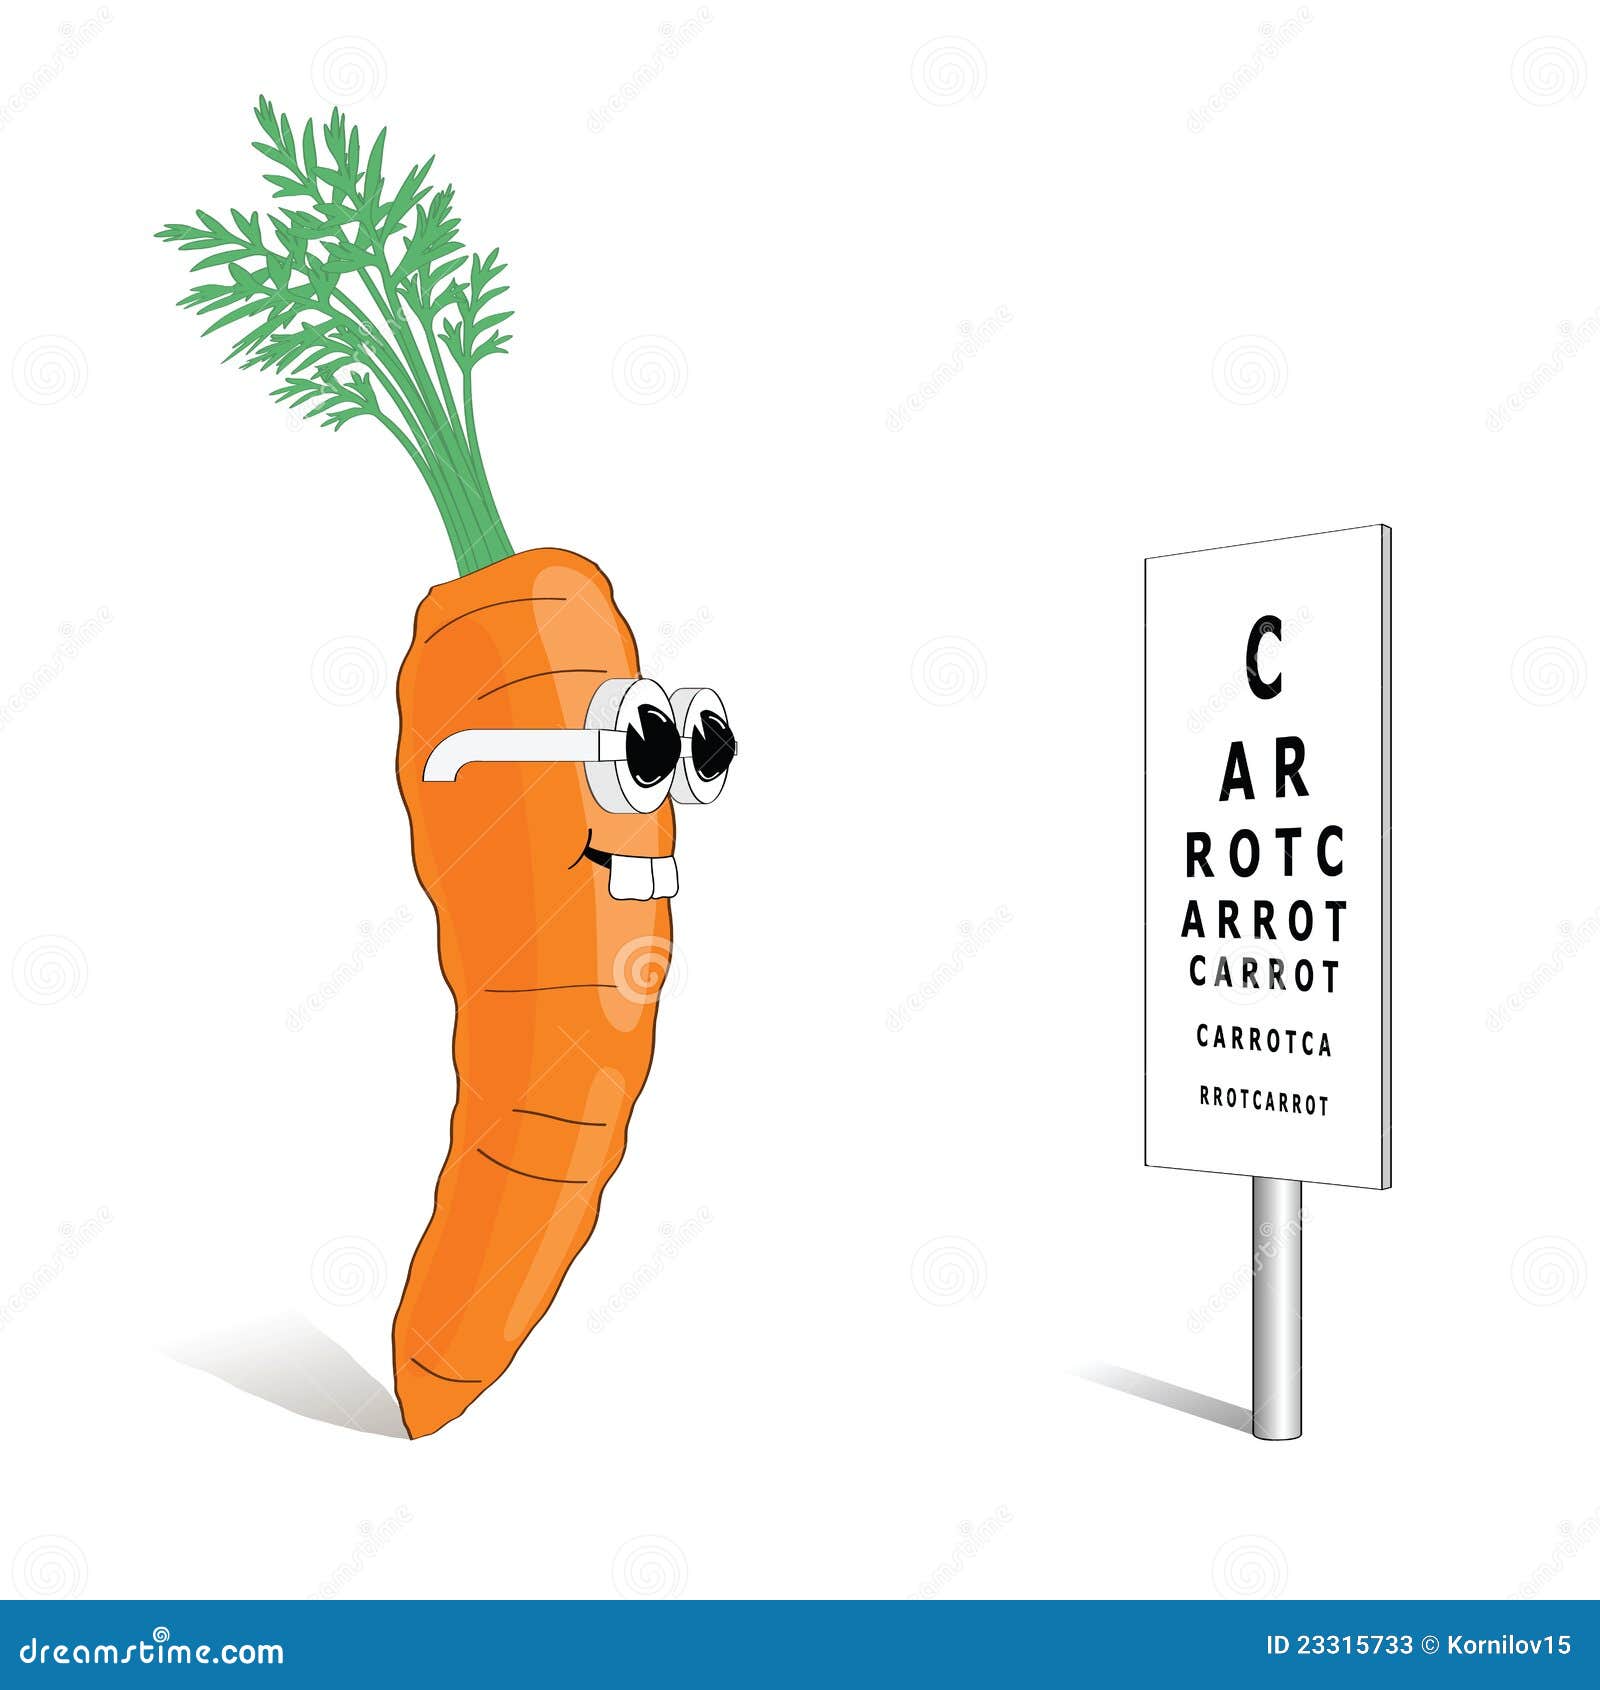 zanahoria-para-la-buena-visi%C3%B3n-23315733.jpg